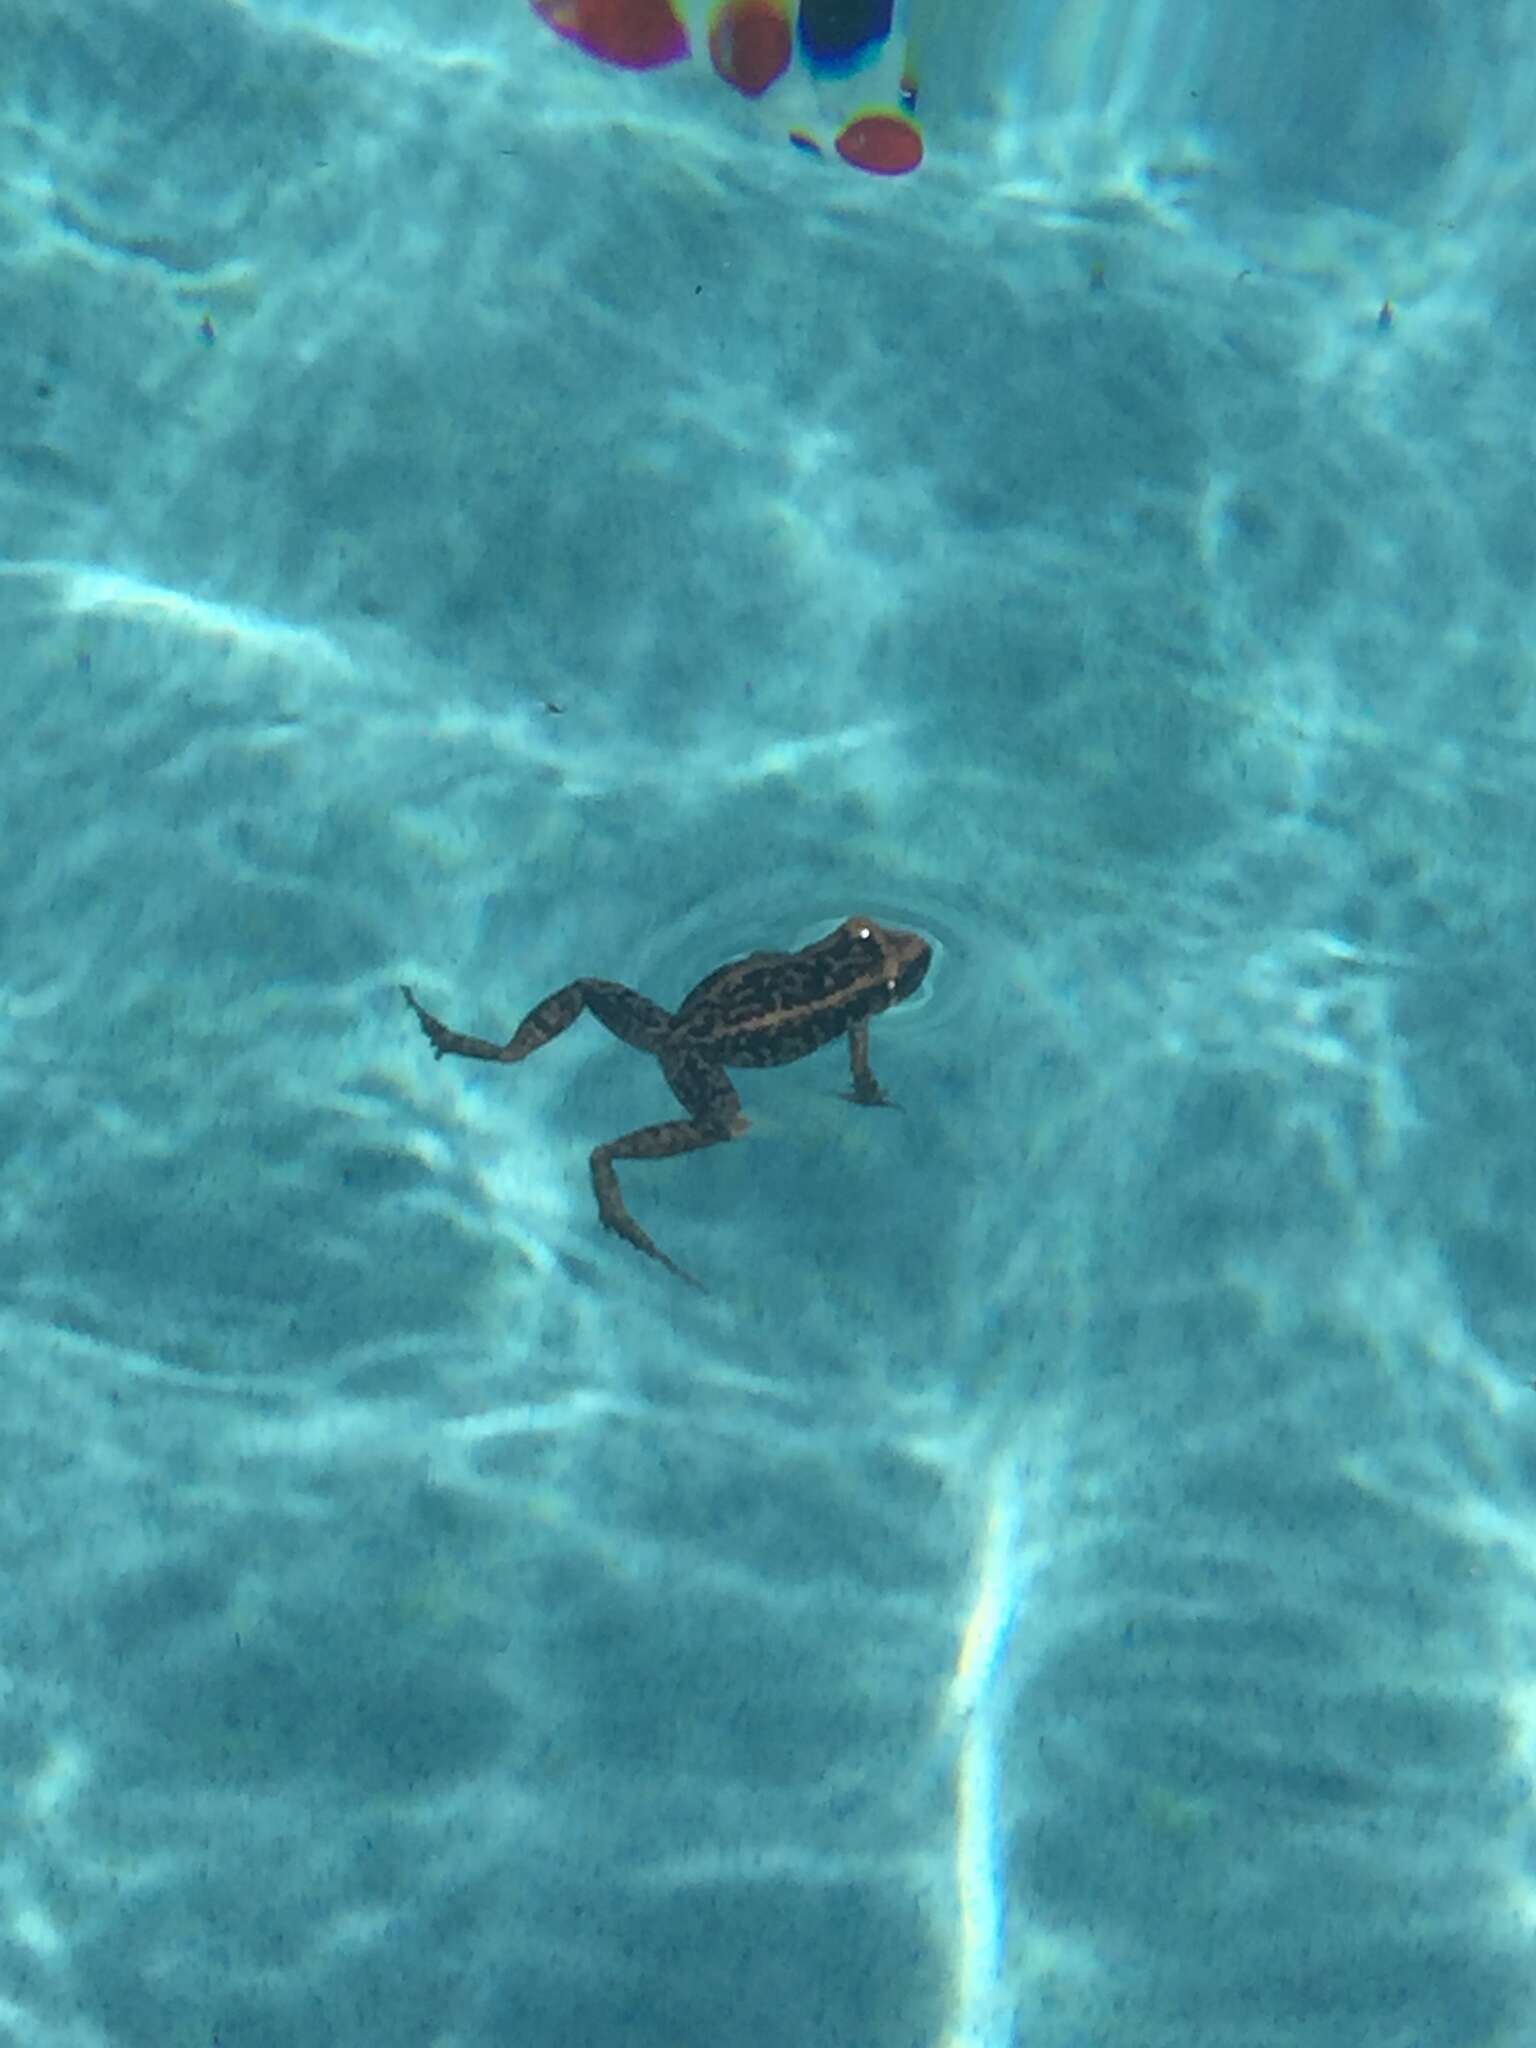 Image of Virgin Islands robber frog